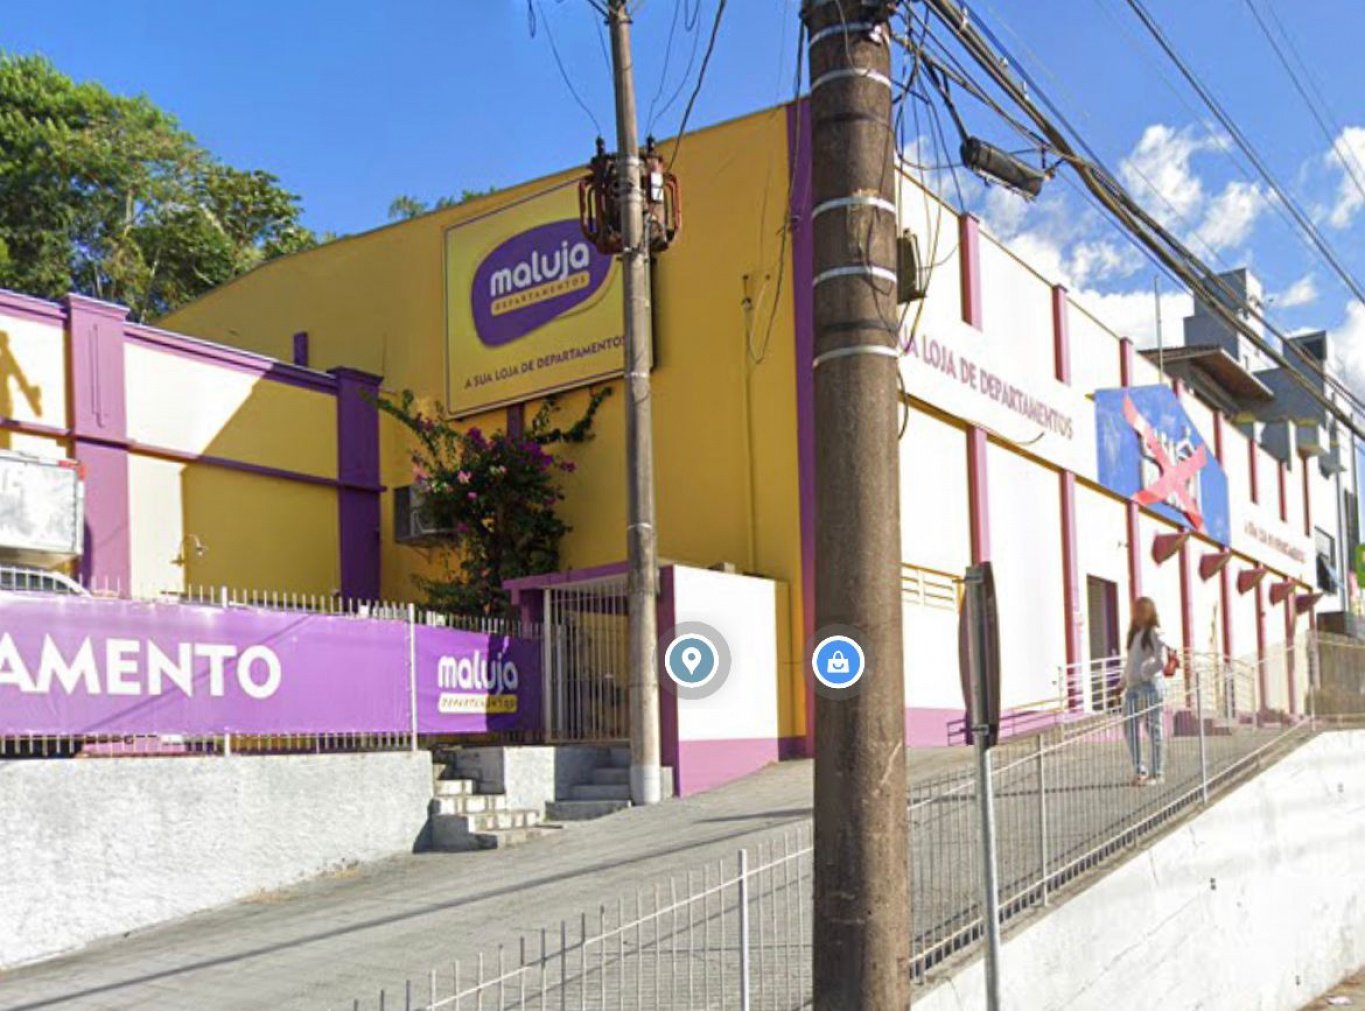 Sala Comercial no Bairro Garcia, aluguel blumenau, dinamica sul, imobiliaria em blumenau, bairro garcia, apartamento para alugar